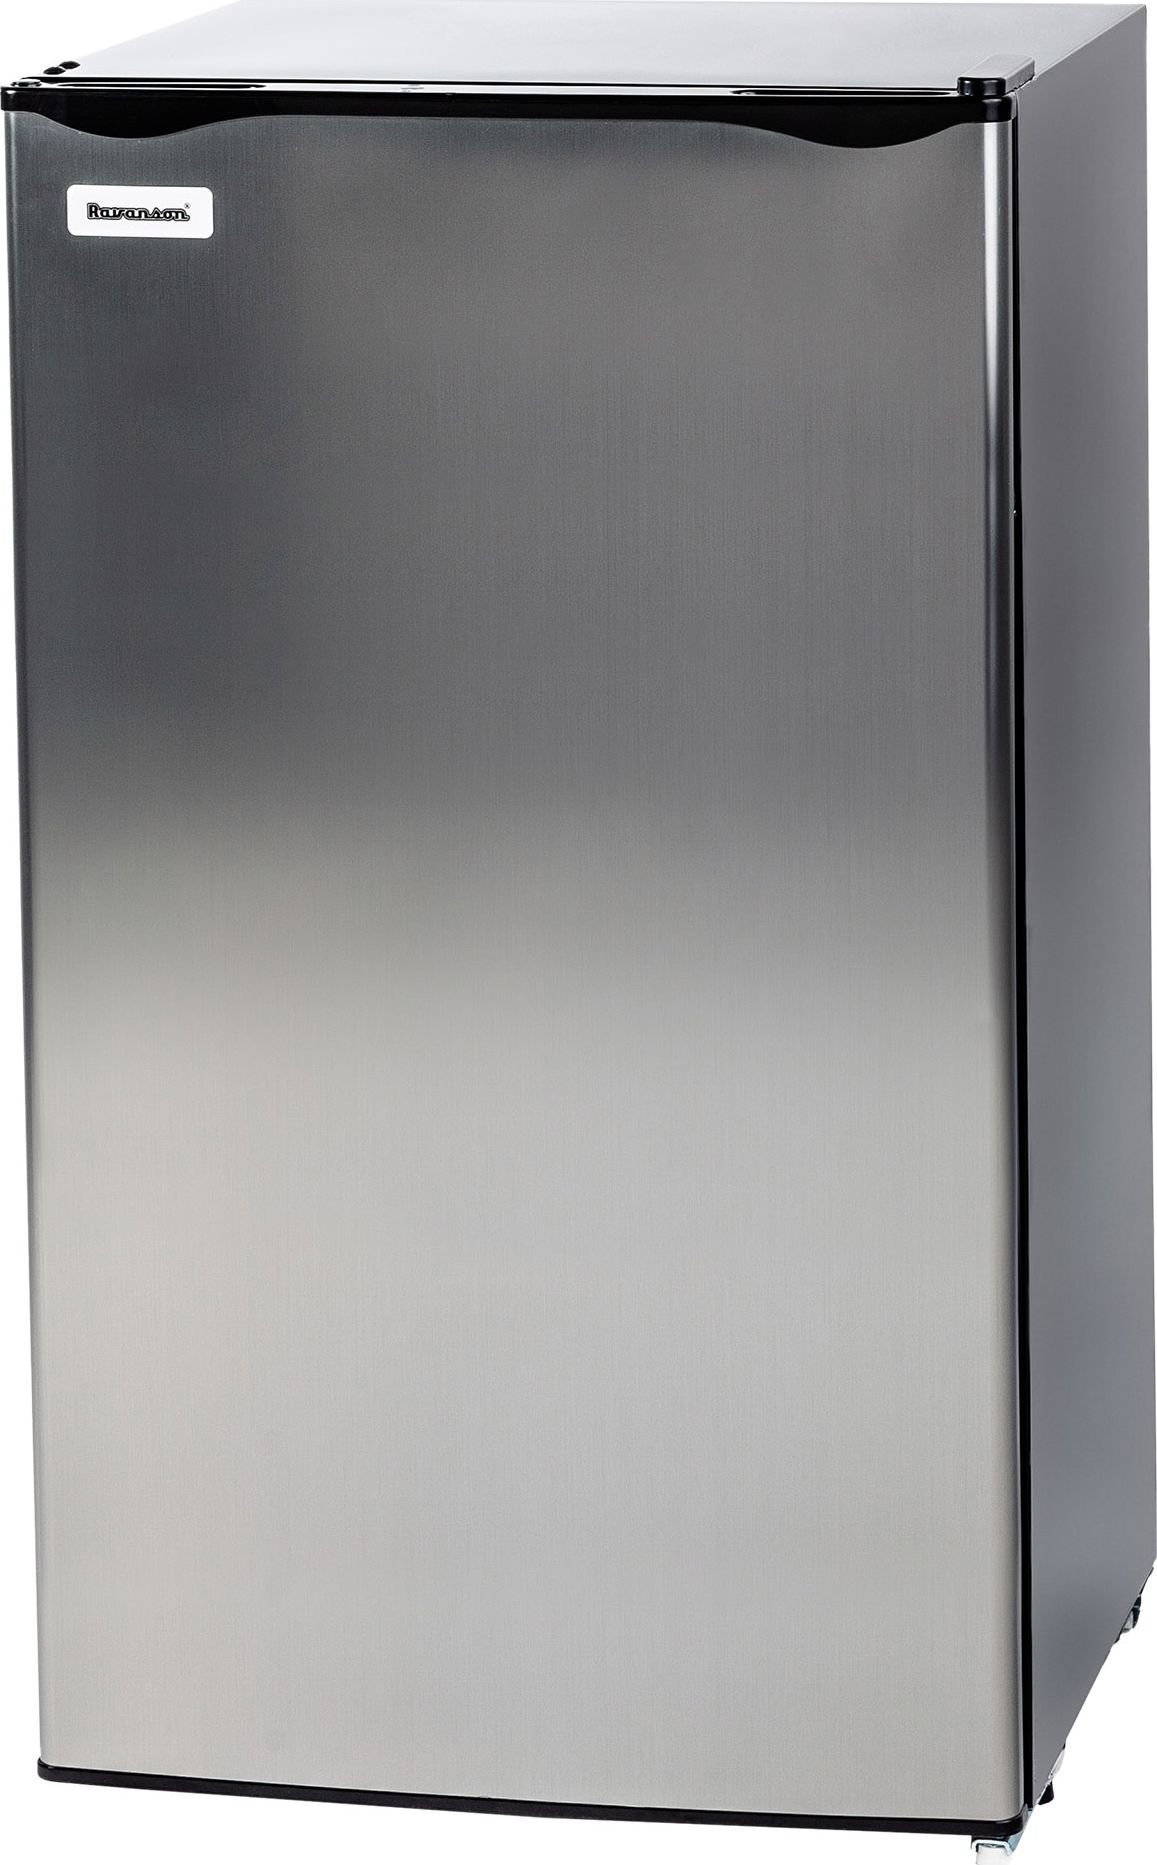 Combine frigorifice - Combina frigorifica  Ravanson LKK-90S,
Argint,2 rafturi,
41 dB,Fara display